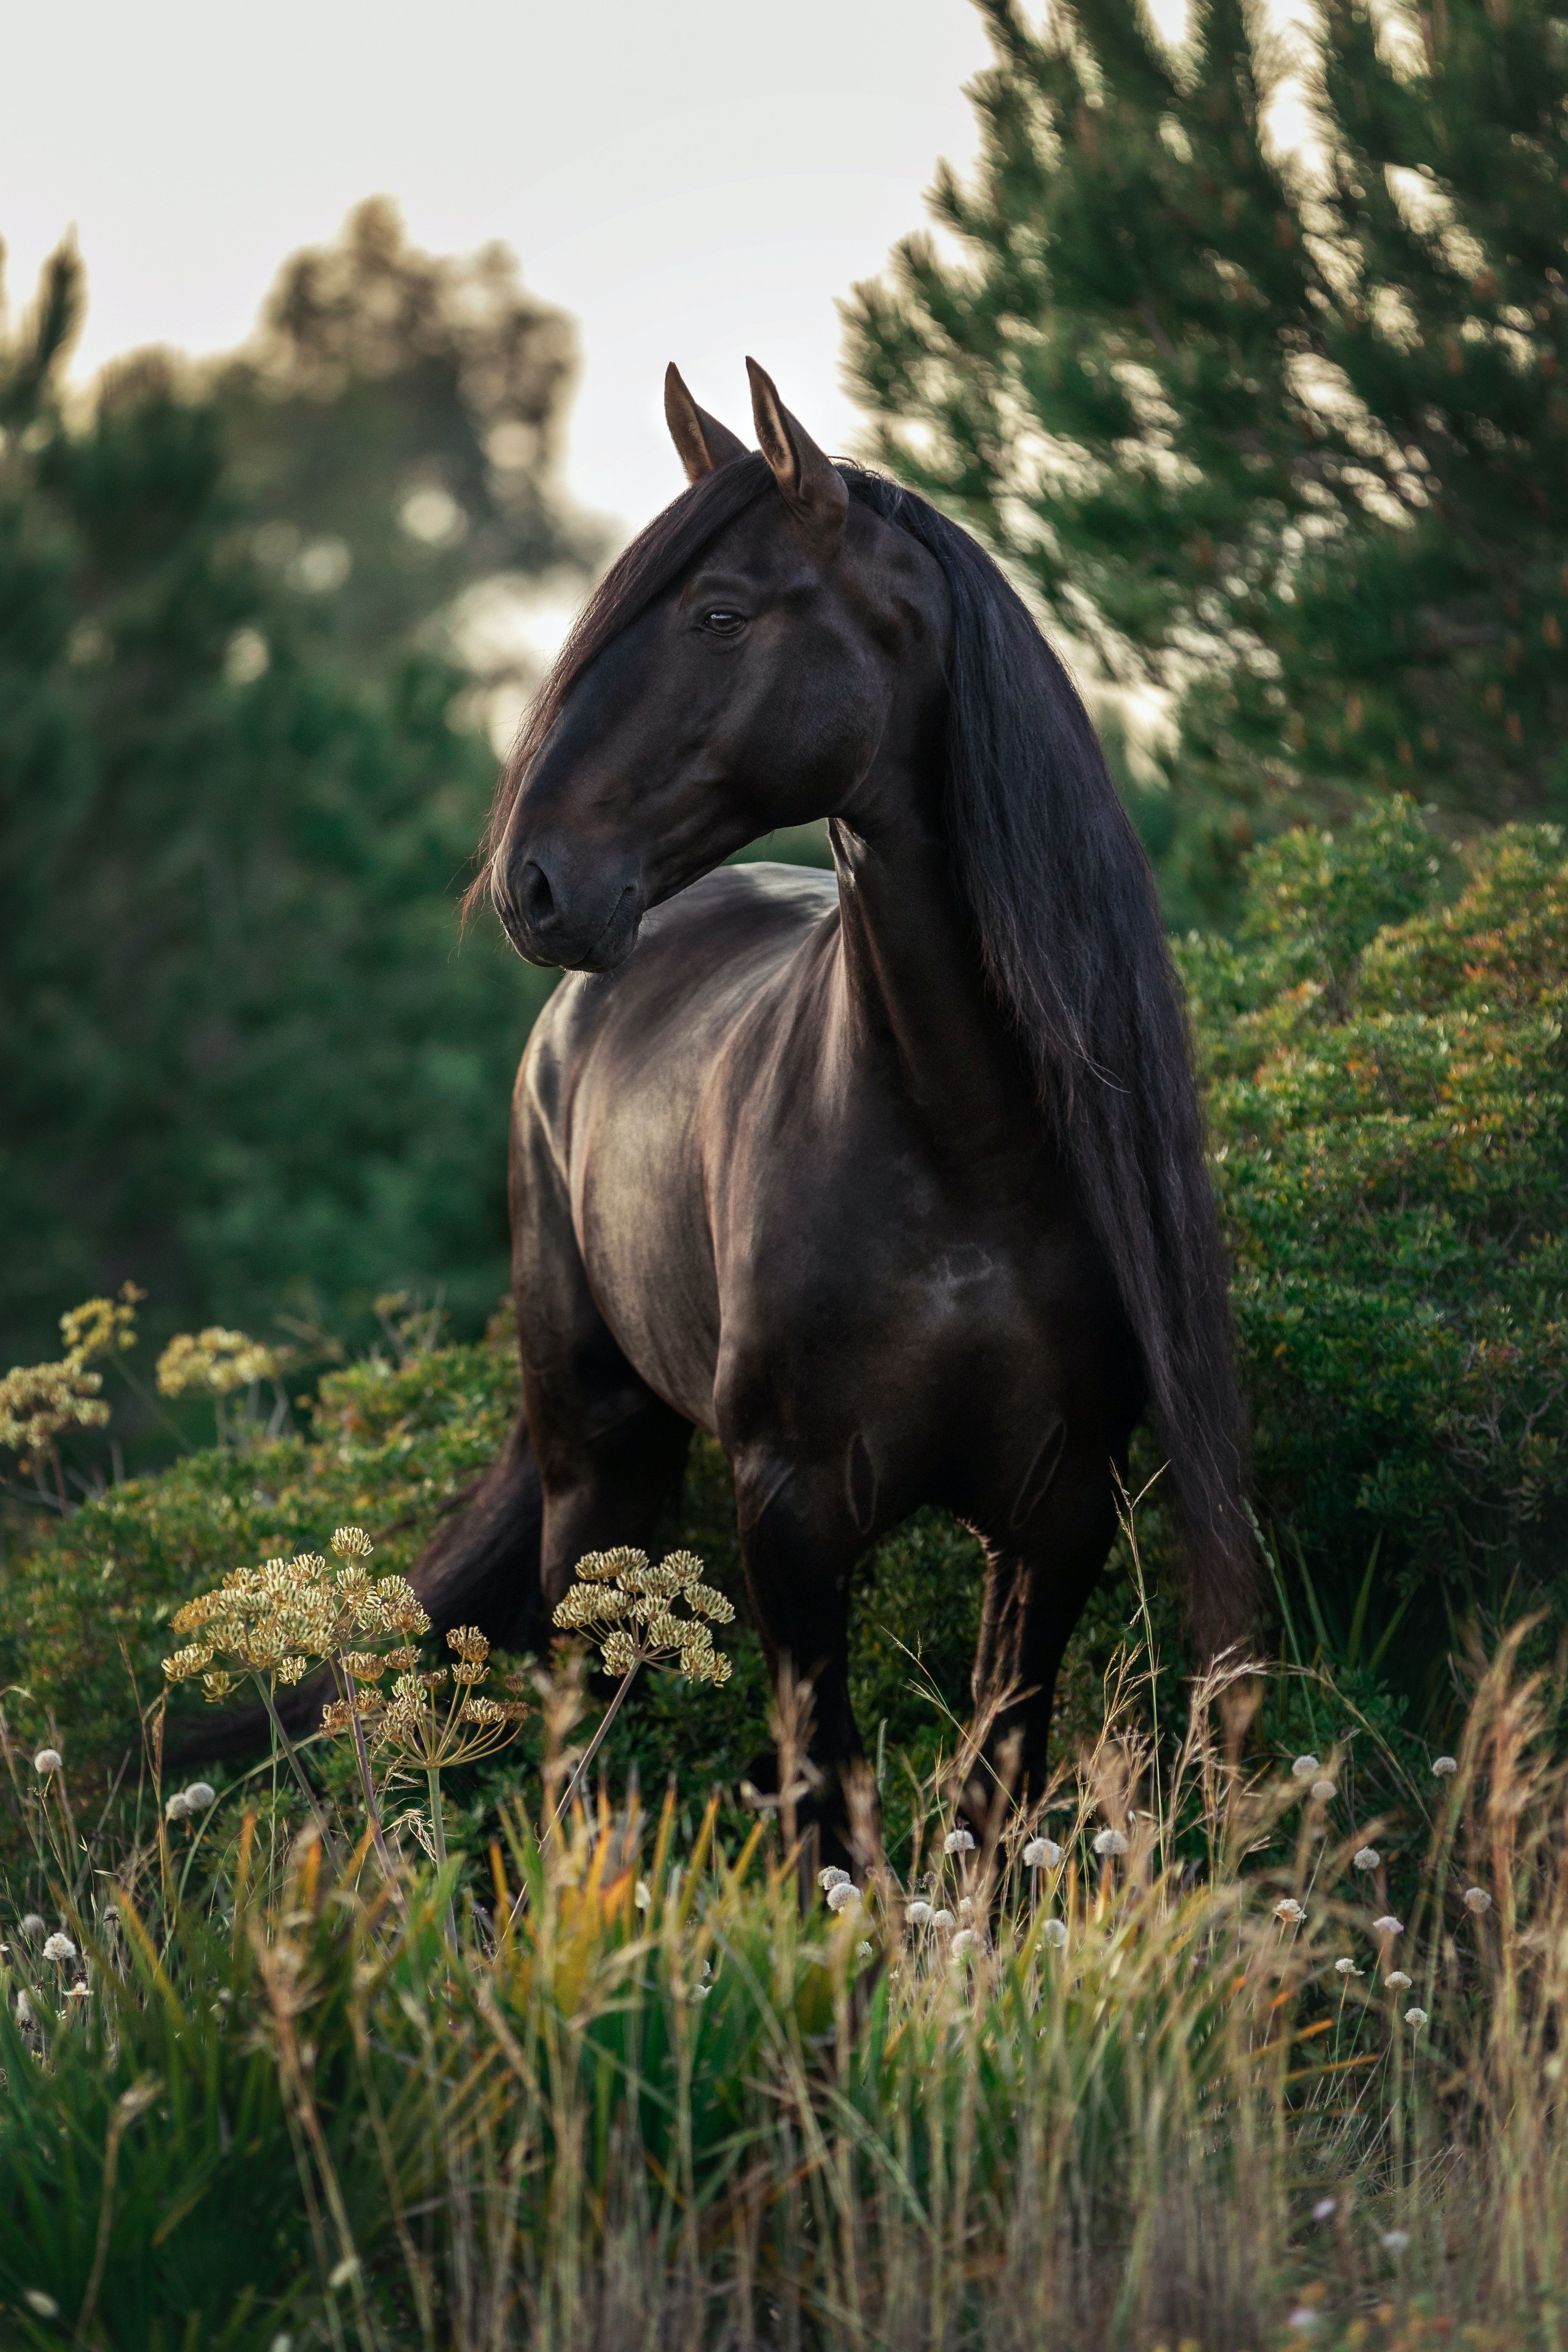 Best Horse Photo · 100% Free Downloads